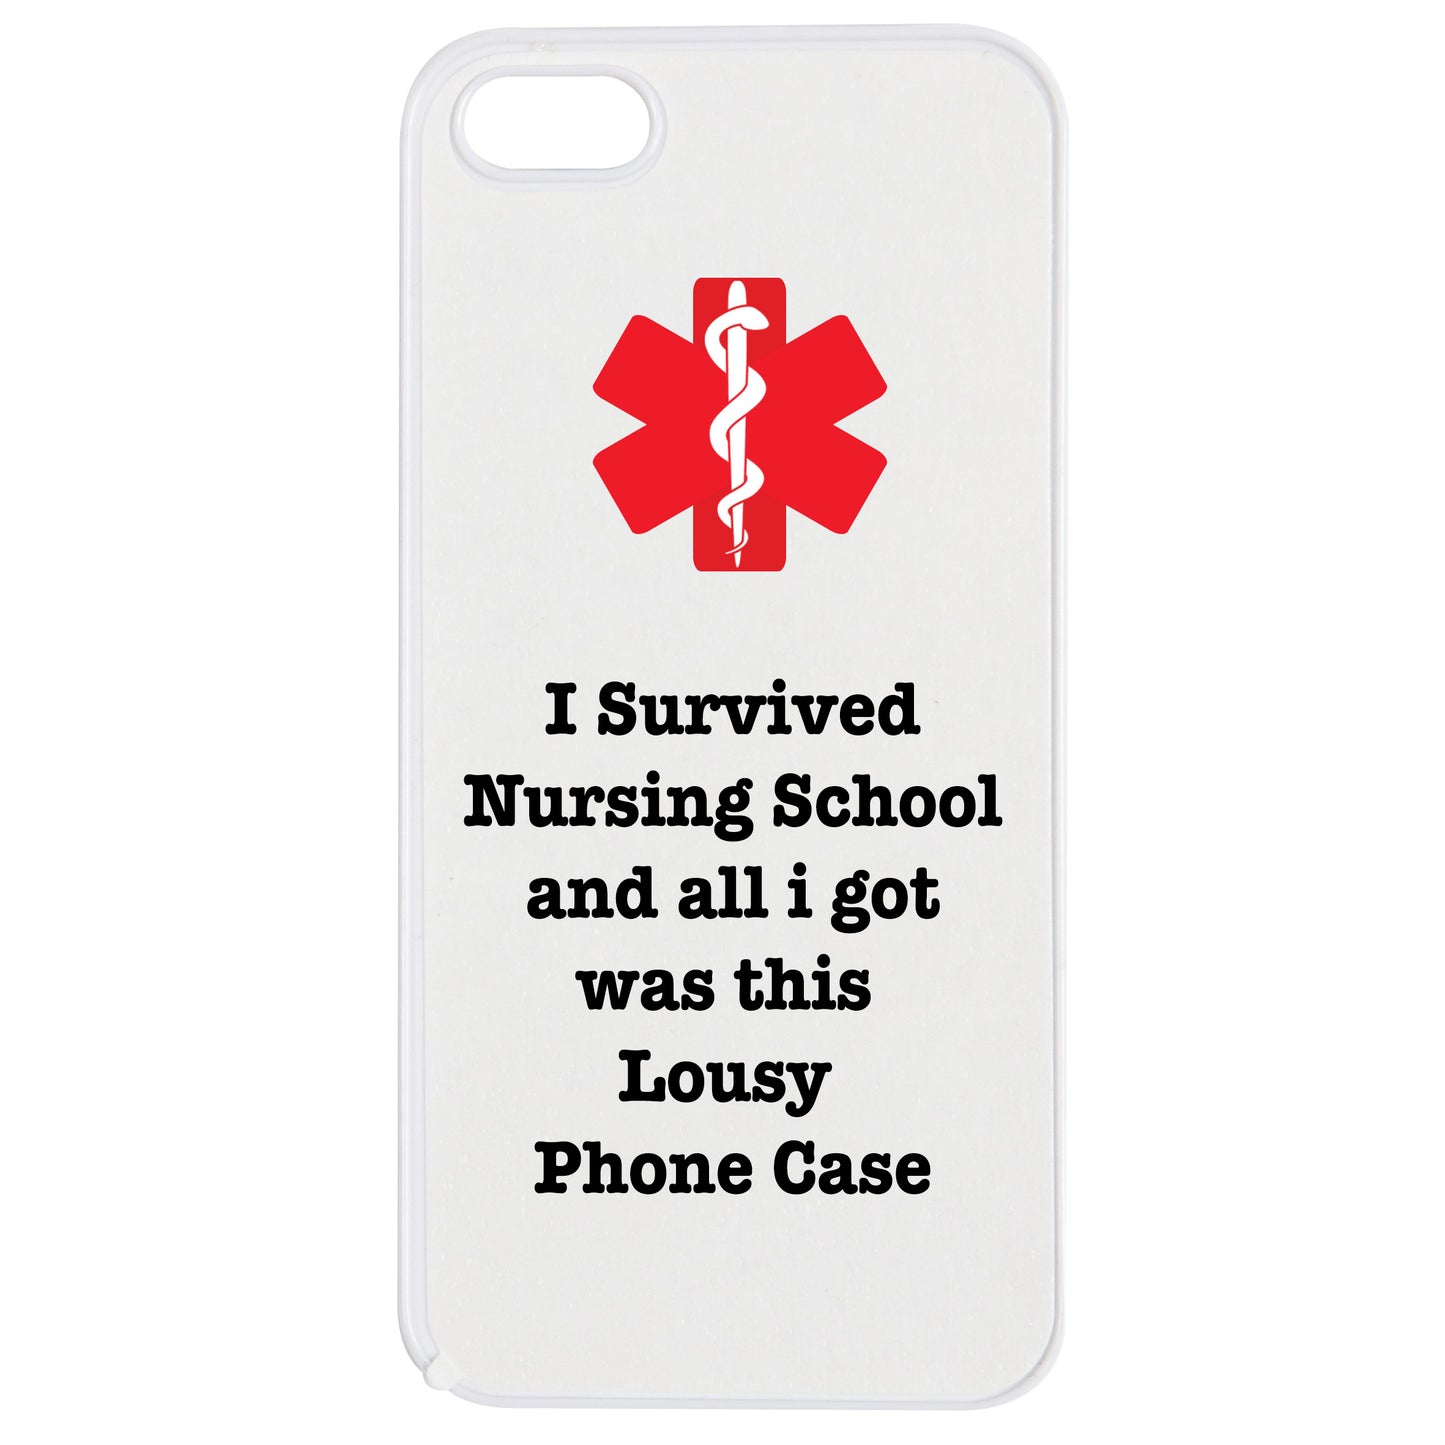 'I Survived Nursing School..' Phone Case - iPhone 5 & 5s